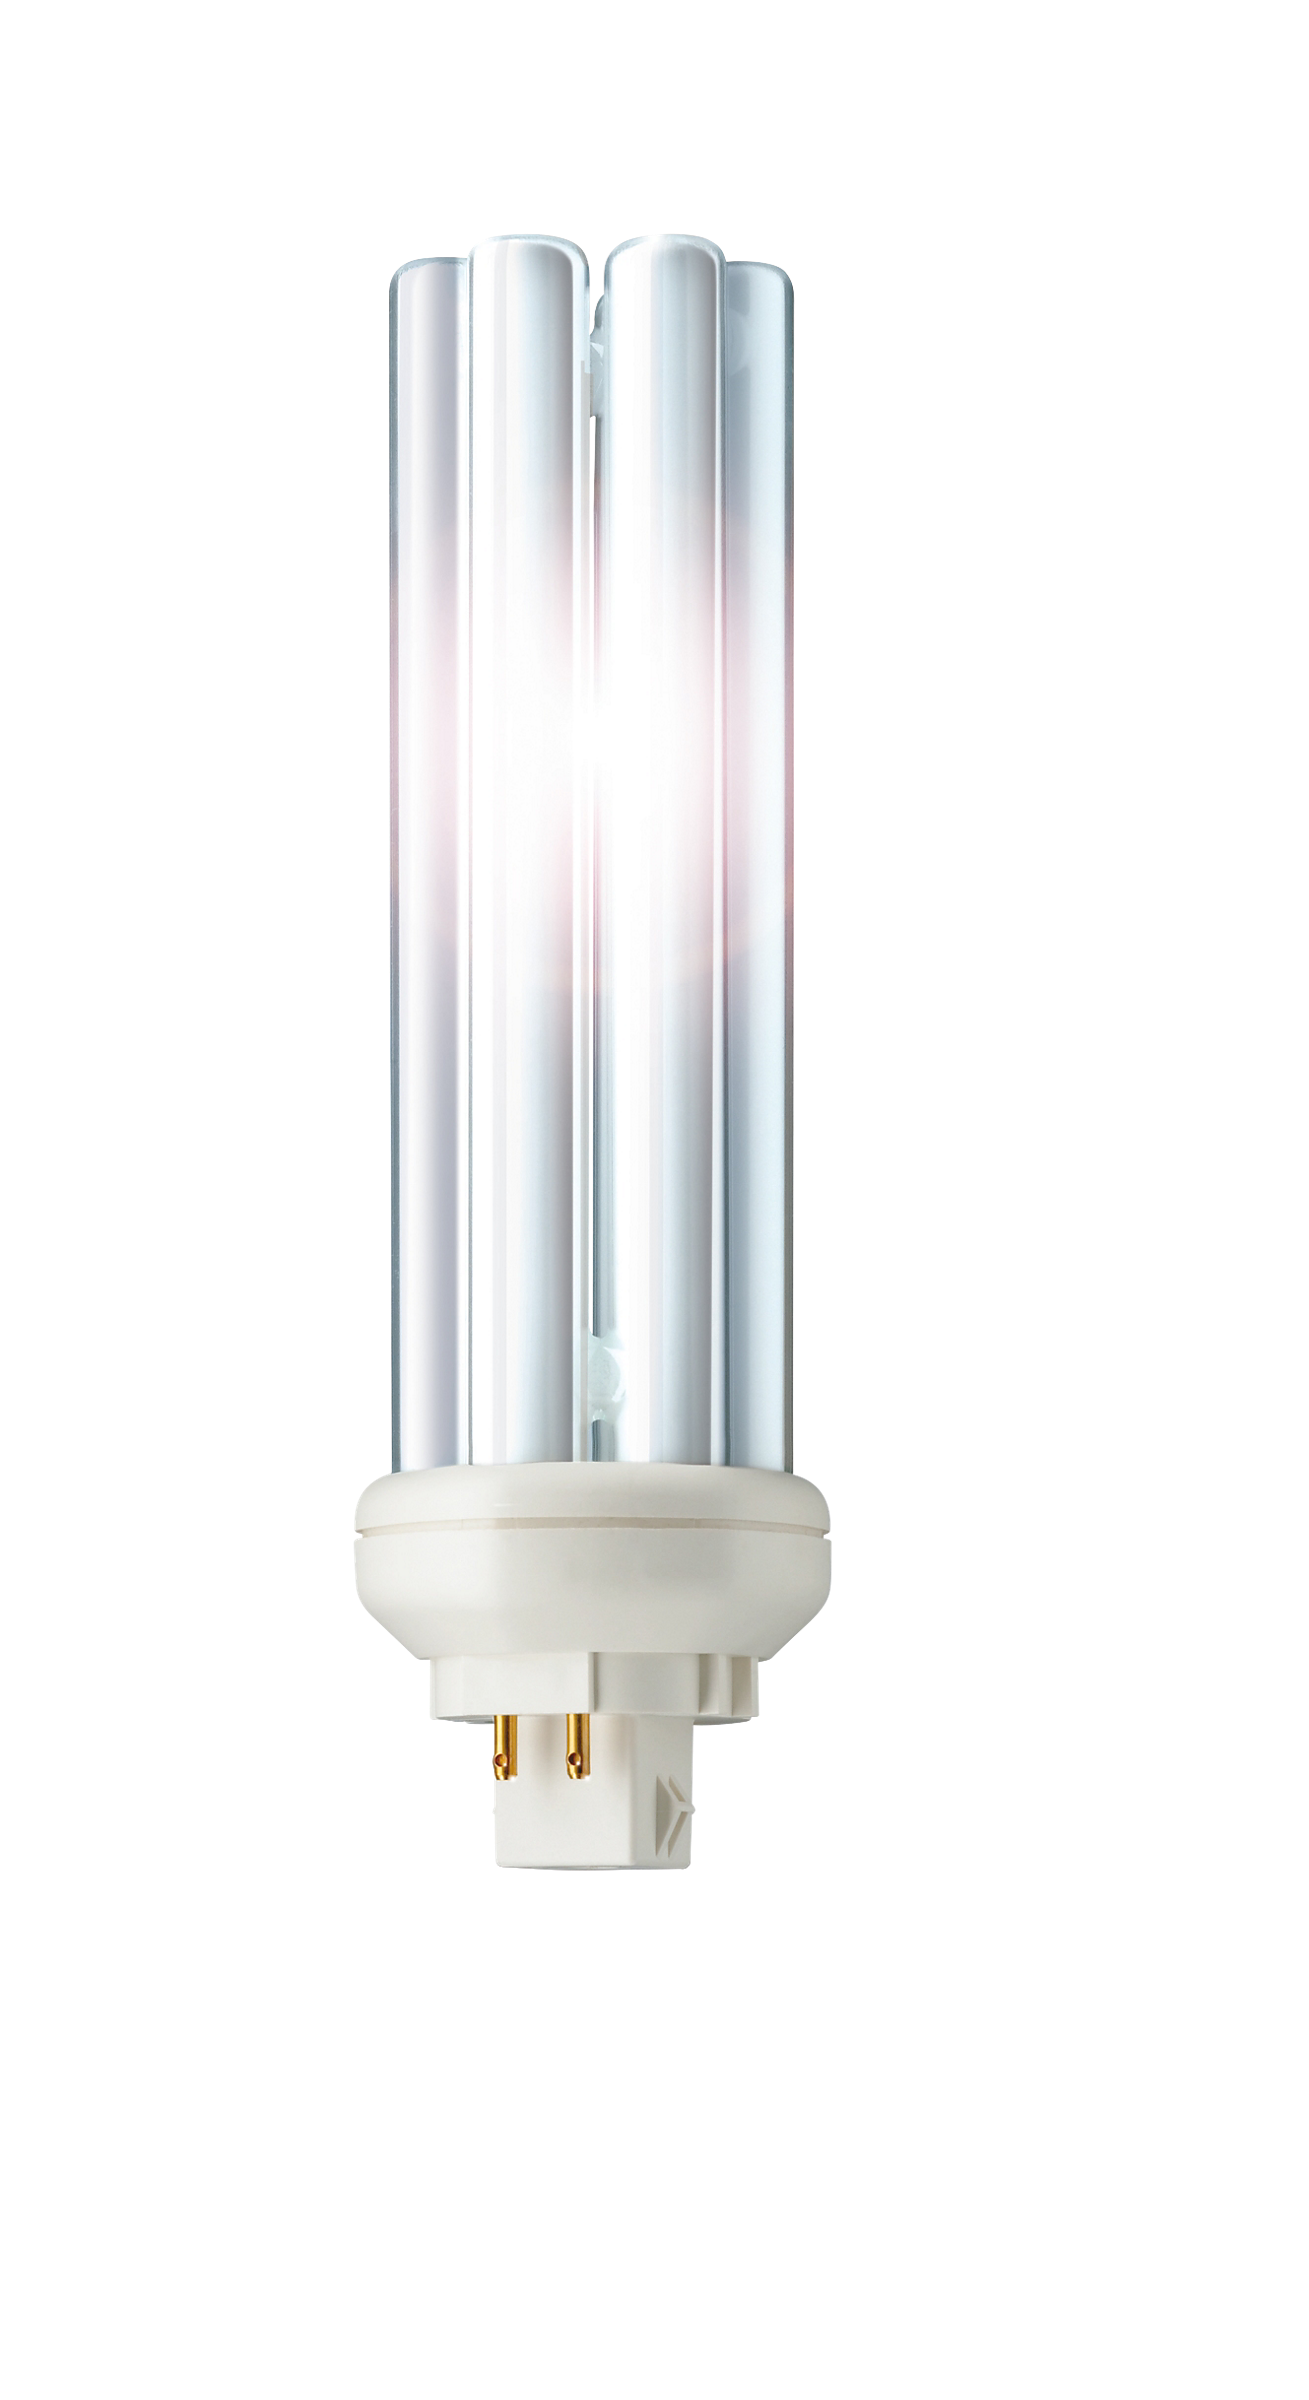 PHILIPS PL-T MASTER 4 PIN FLUORESCENT LAMP TUBE GX24q-3 COLOUR 840 COOL WHITE 